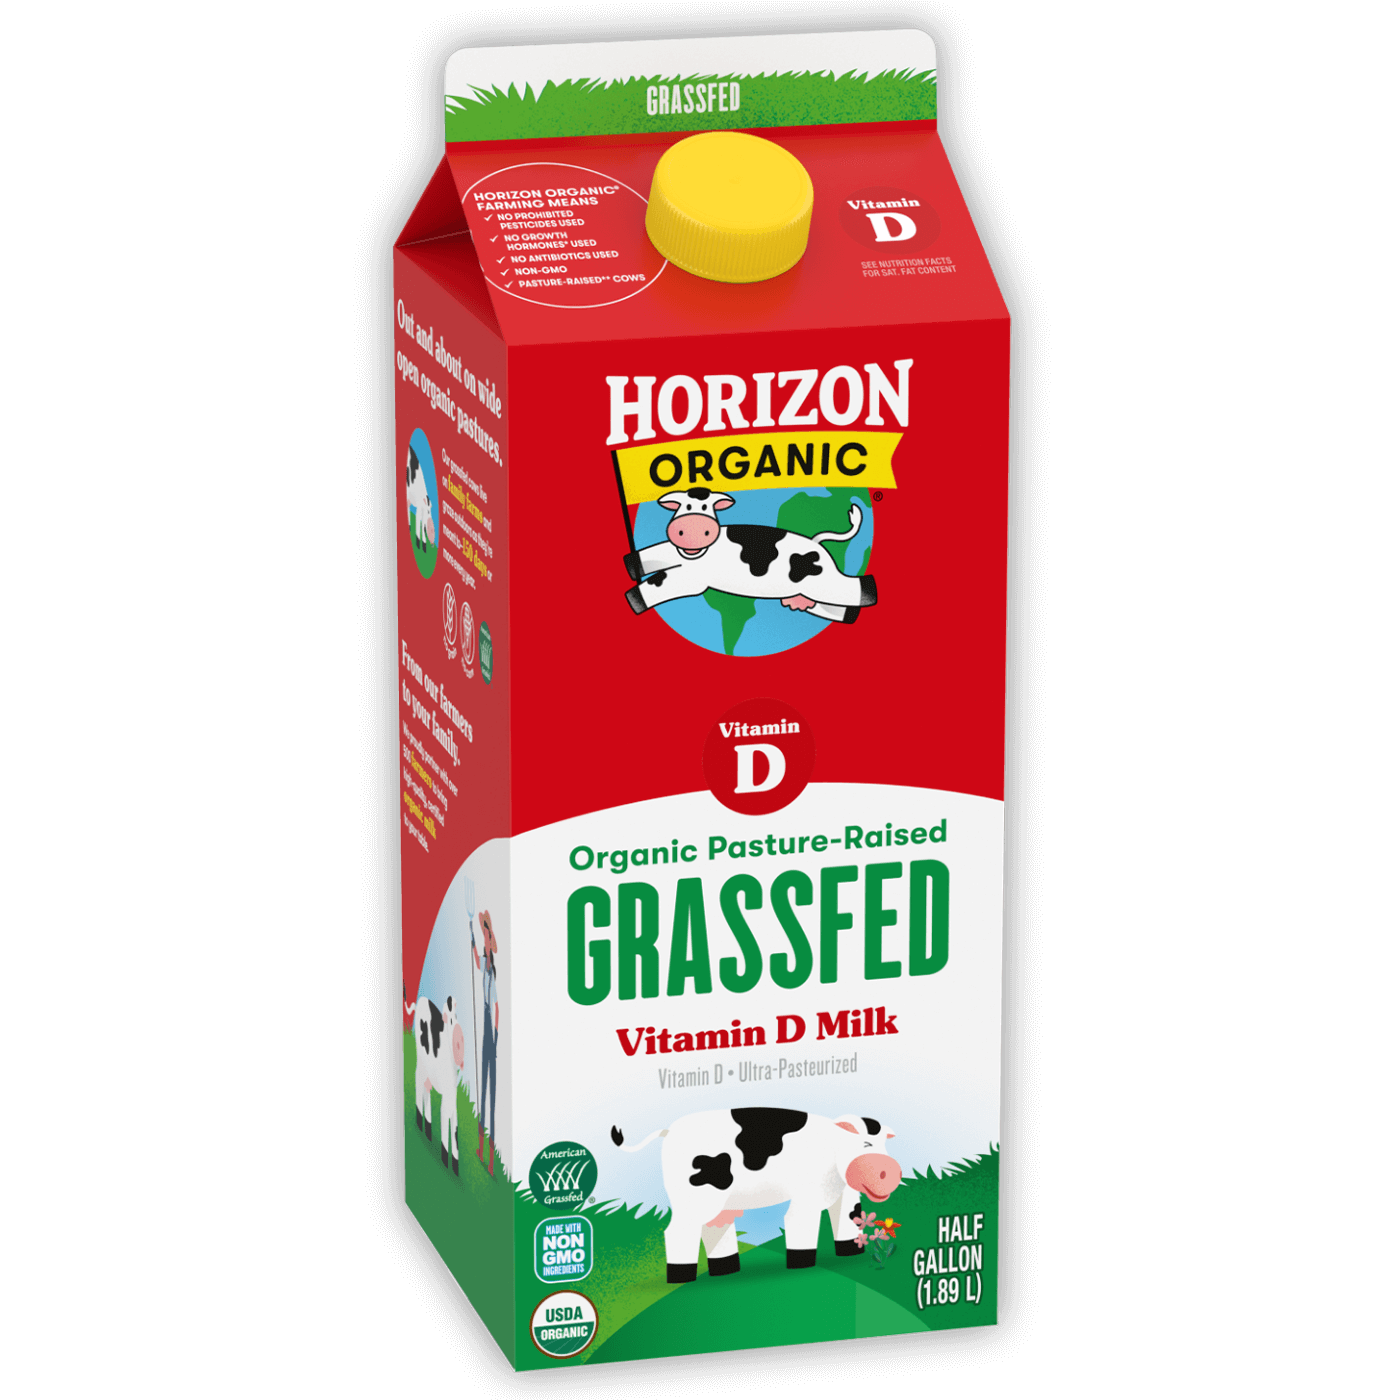 https://horizon.com/wp-content/uploads/horizon-organic-grassfed-whole-milk-v2.png